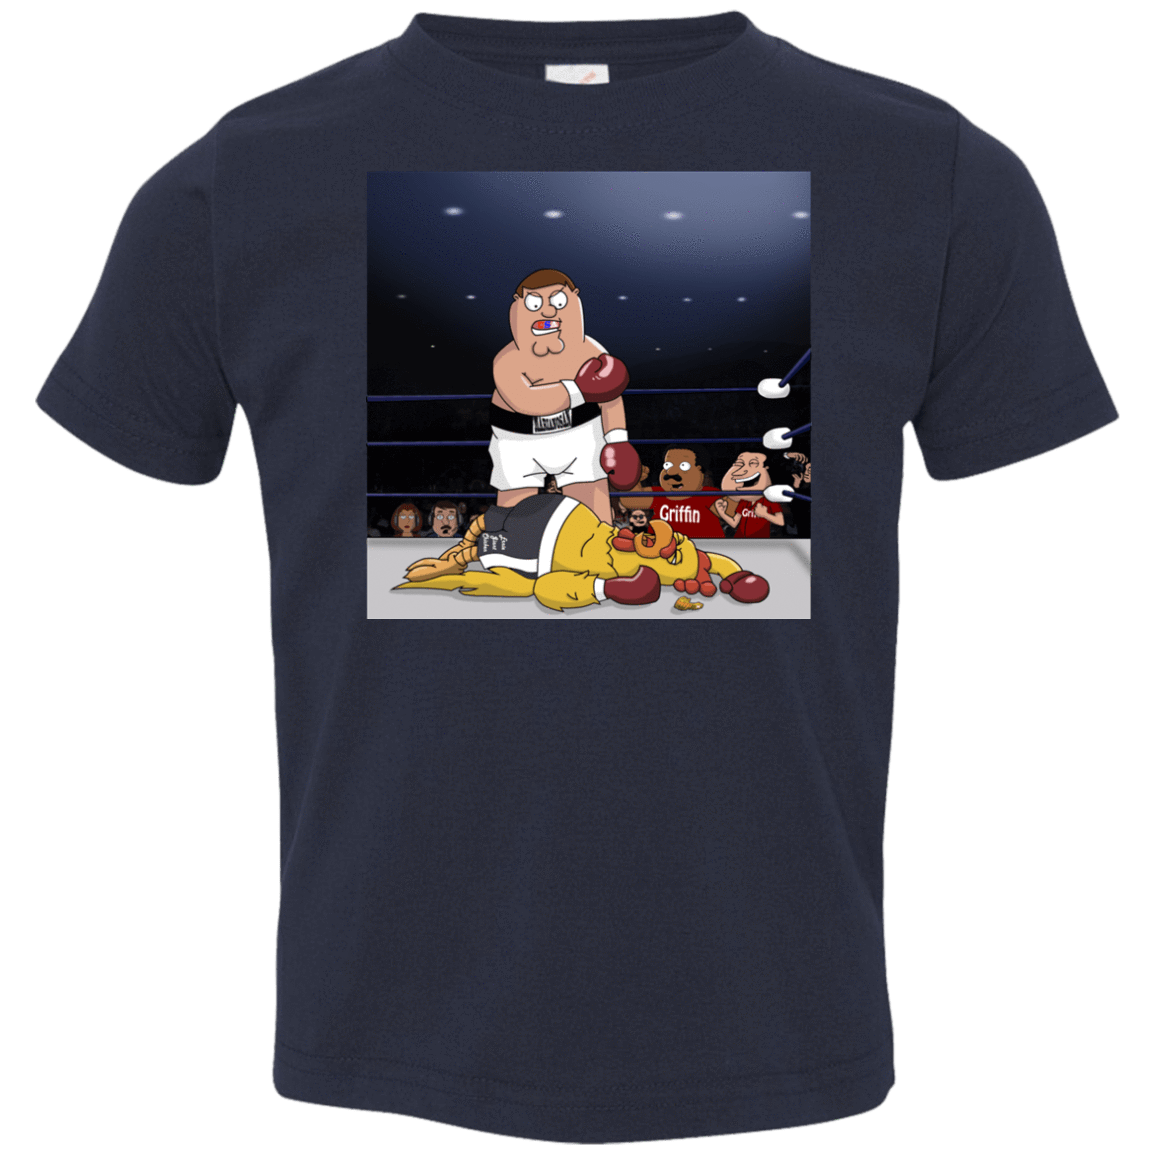 T-Shirts Navy / 2T Peter vs Giant Chicken Toddler Premium T-Shirt